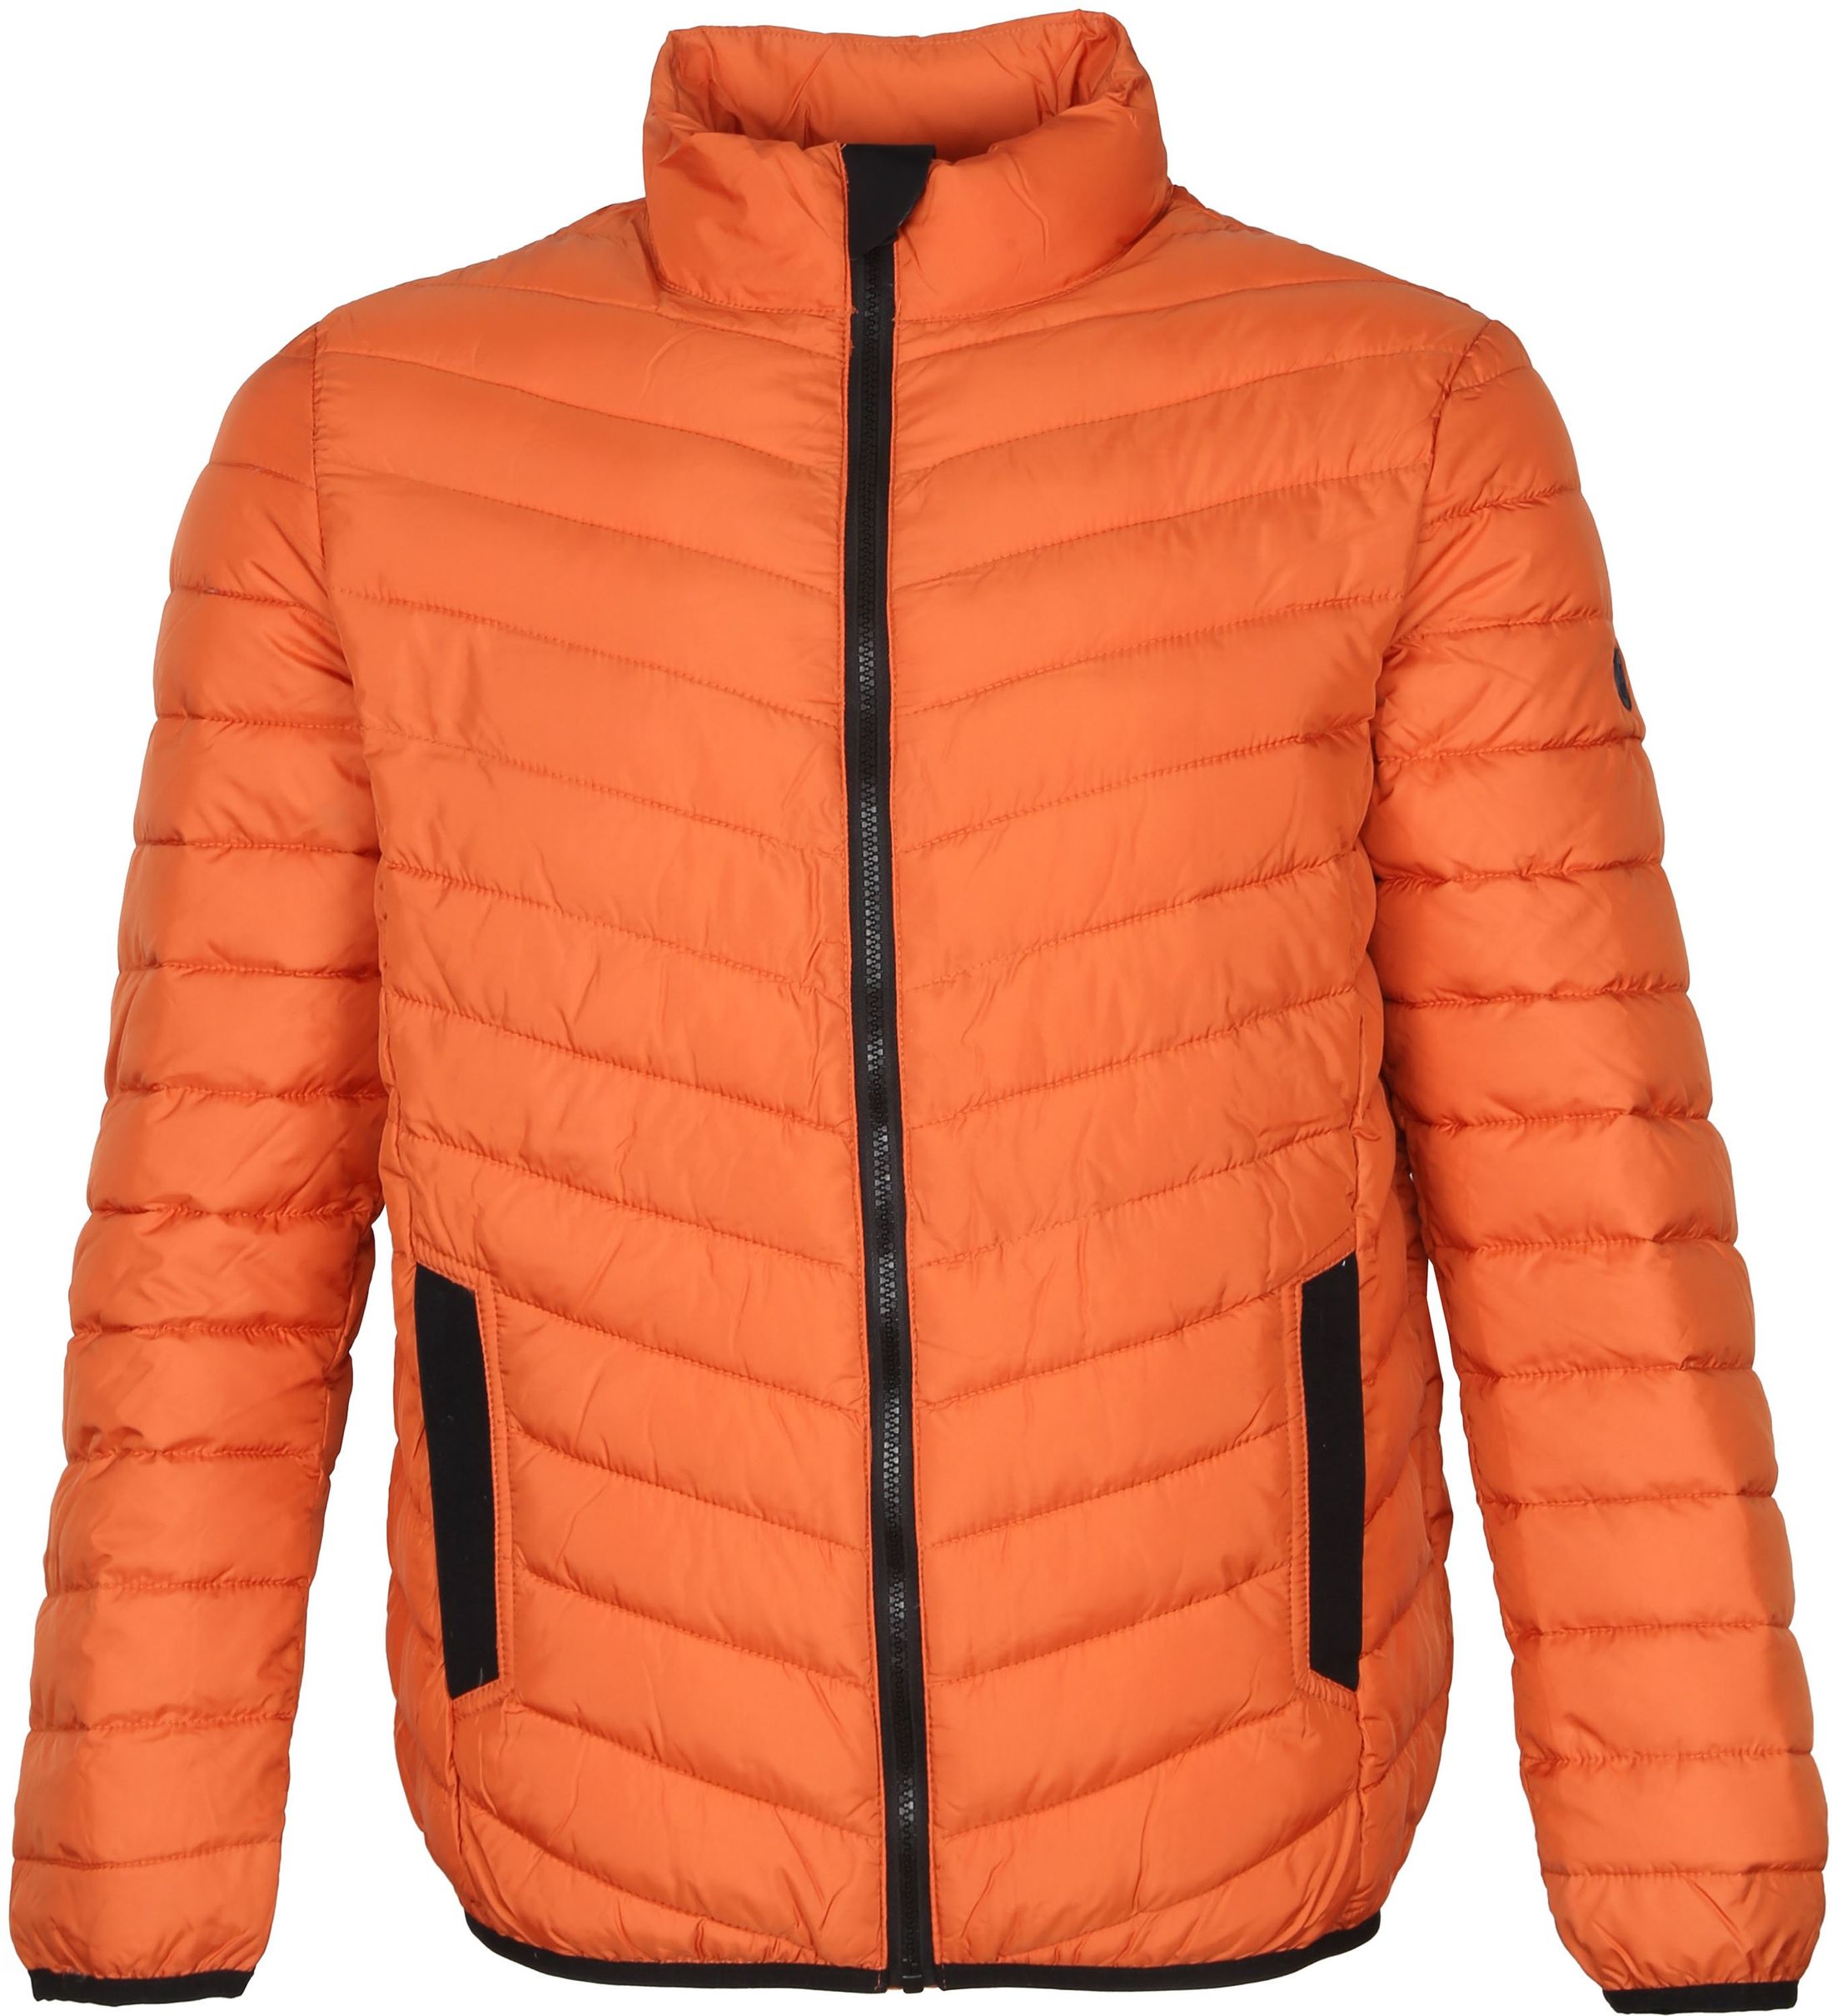 Suitable Jacket Toni Orange size M